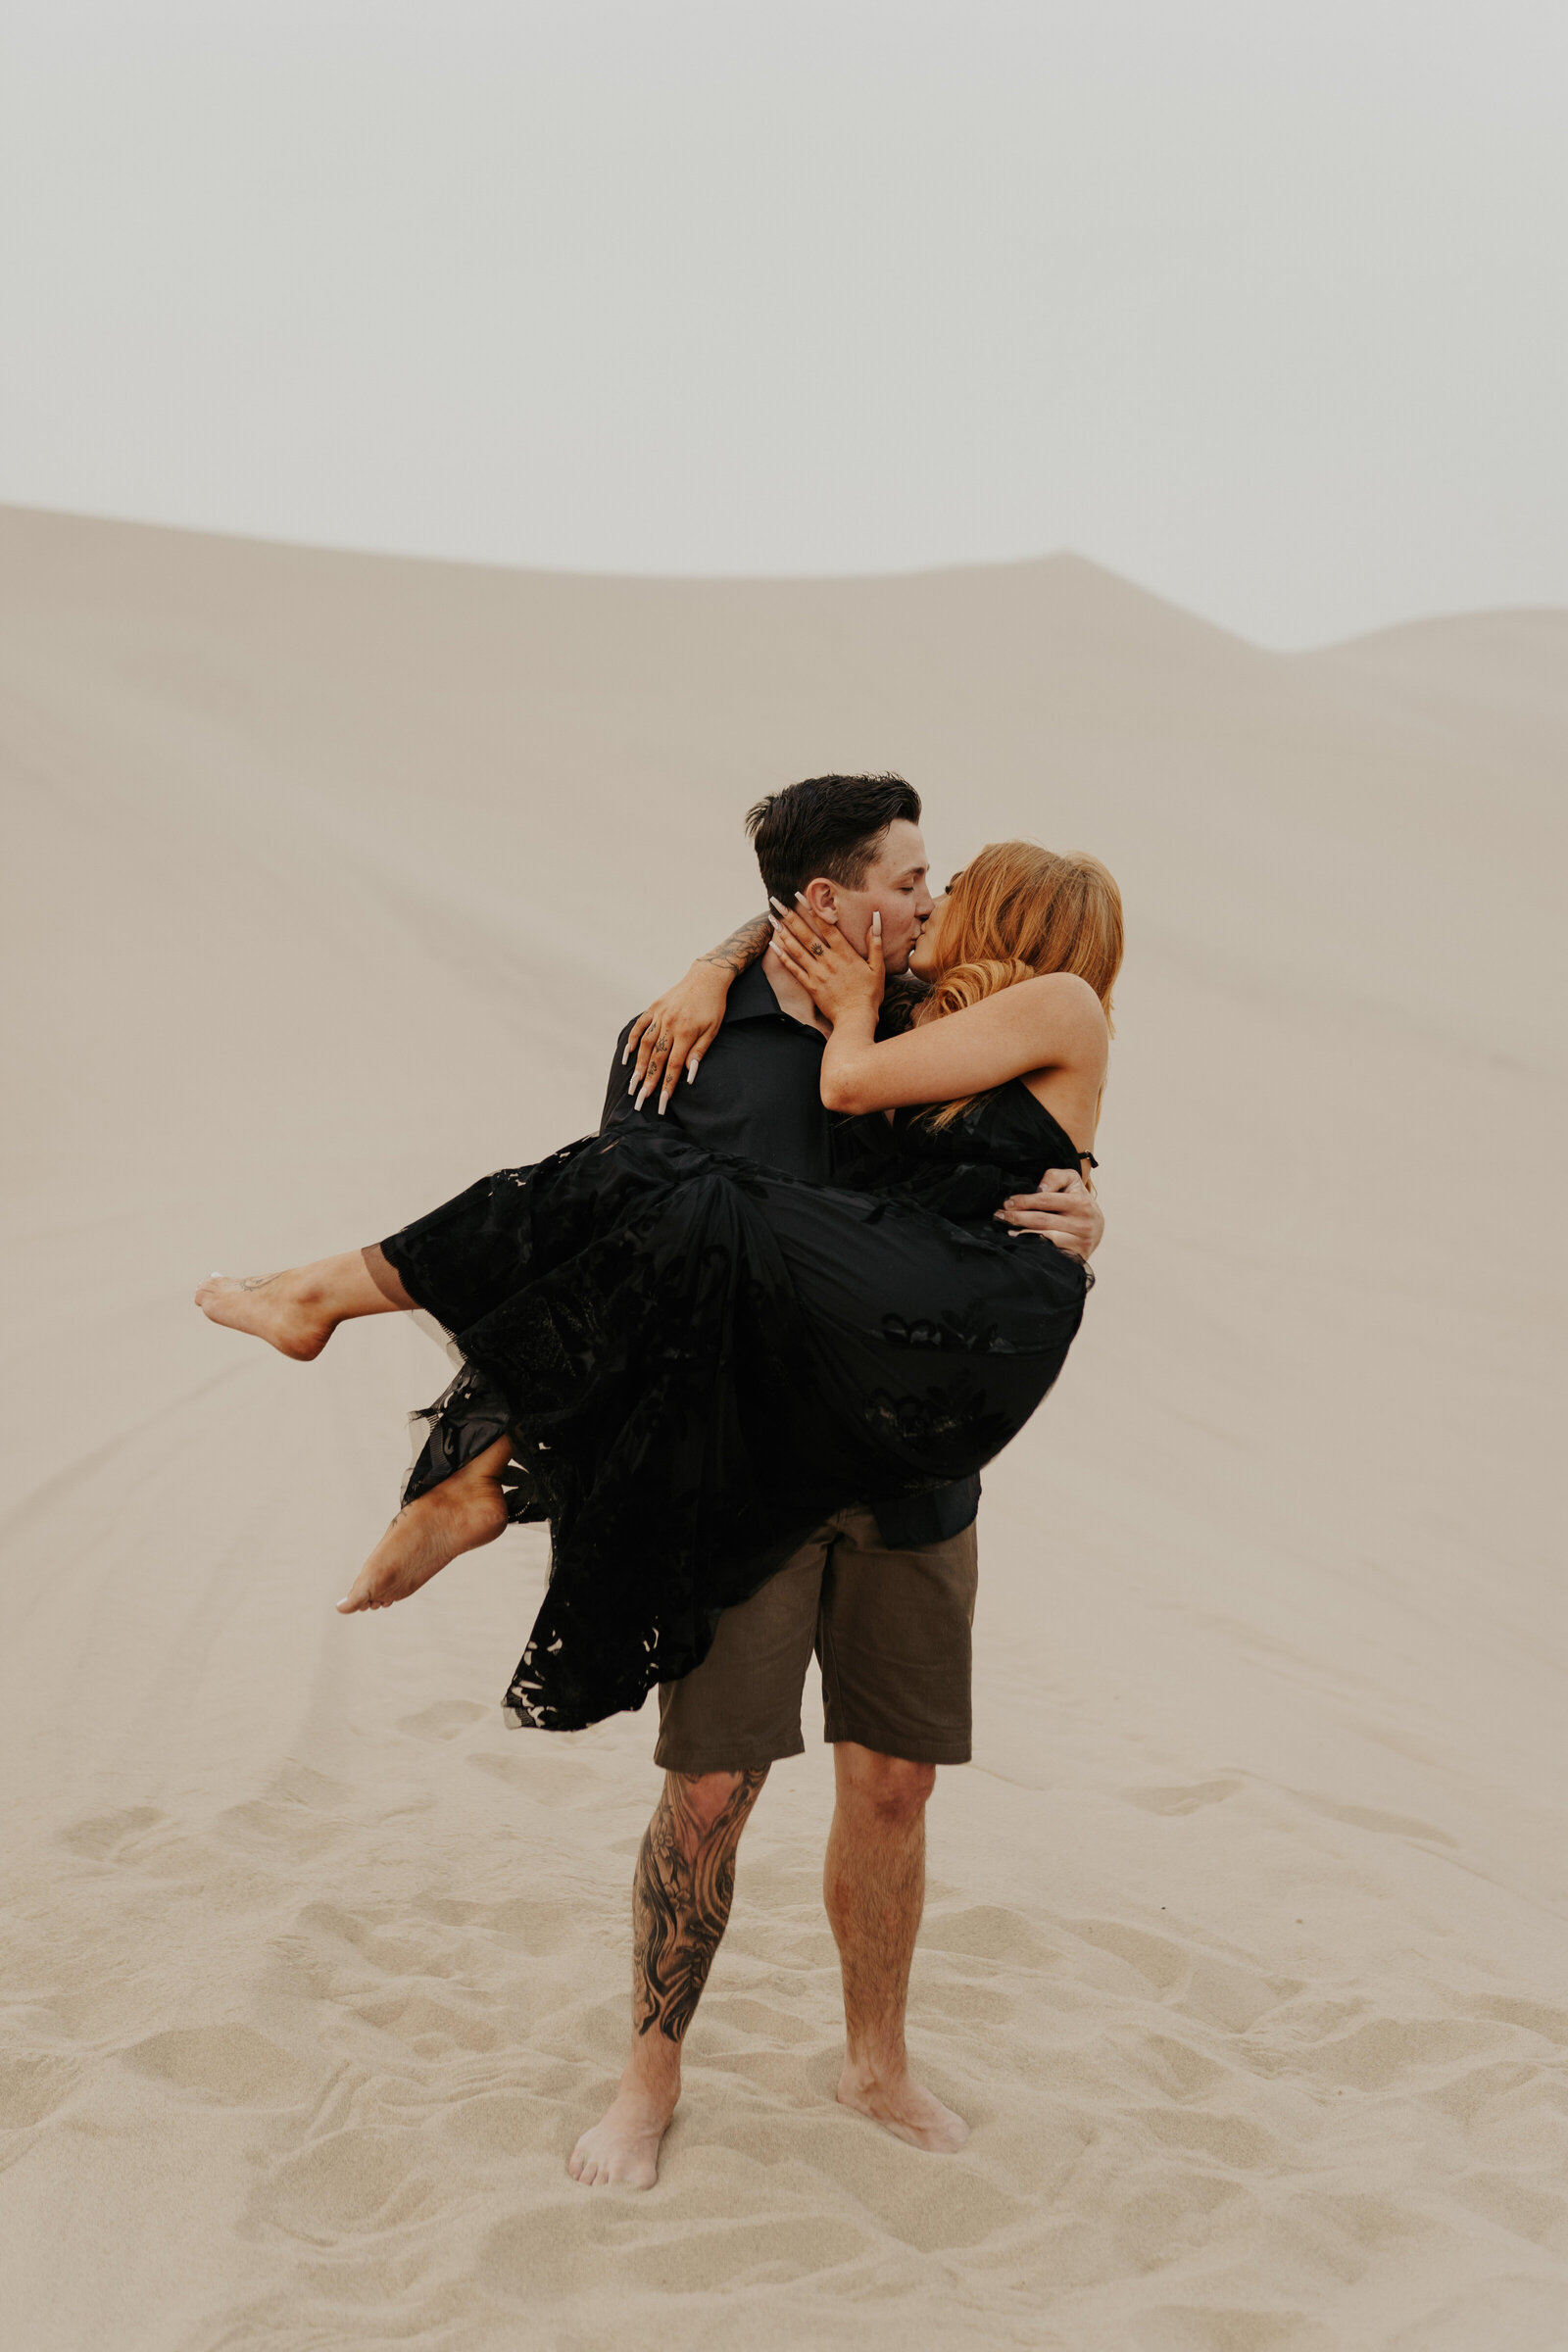 Sand Dunes Couples Photos - Raquel King Photography42